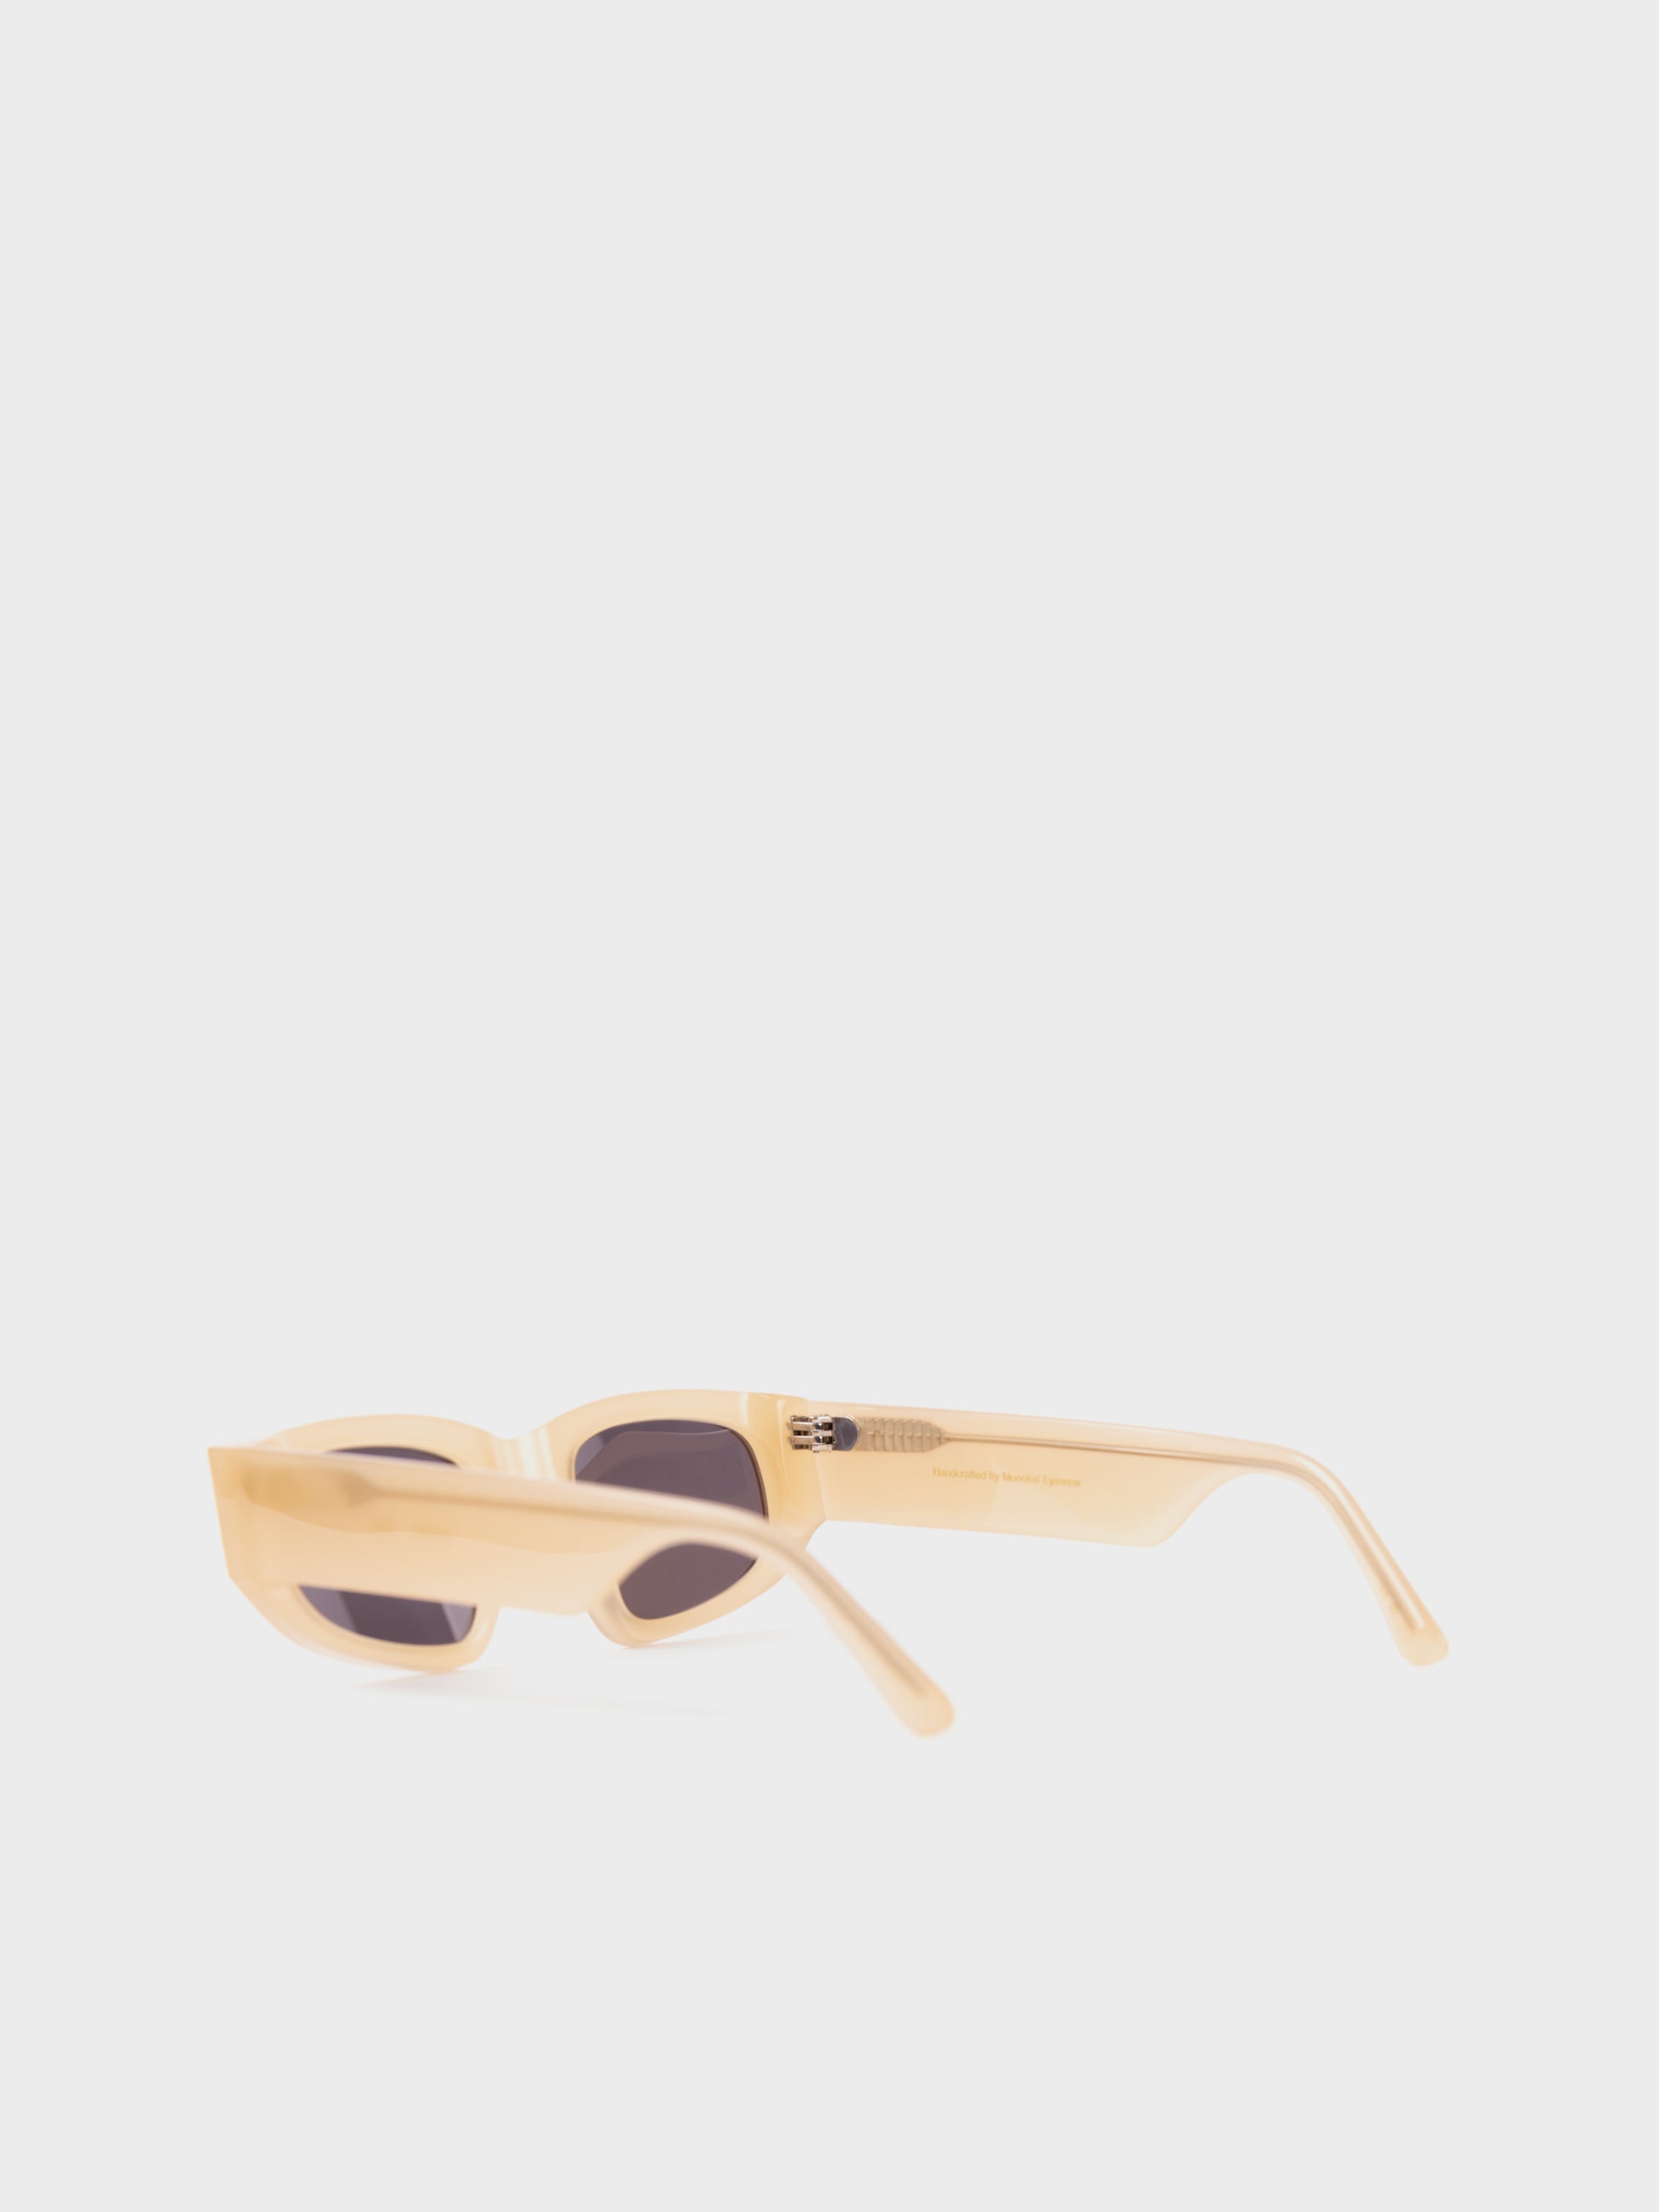 Monokel Sunglasses - Eclipse/Matt Sand